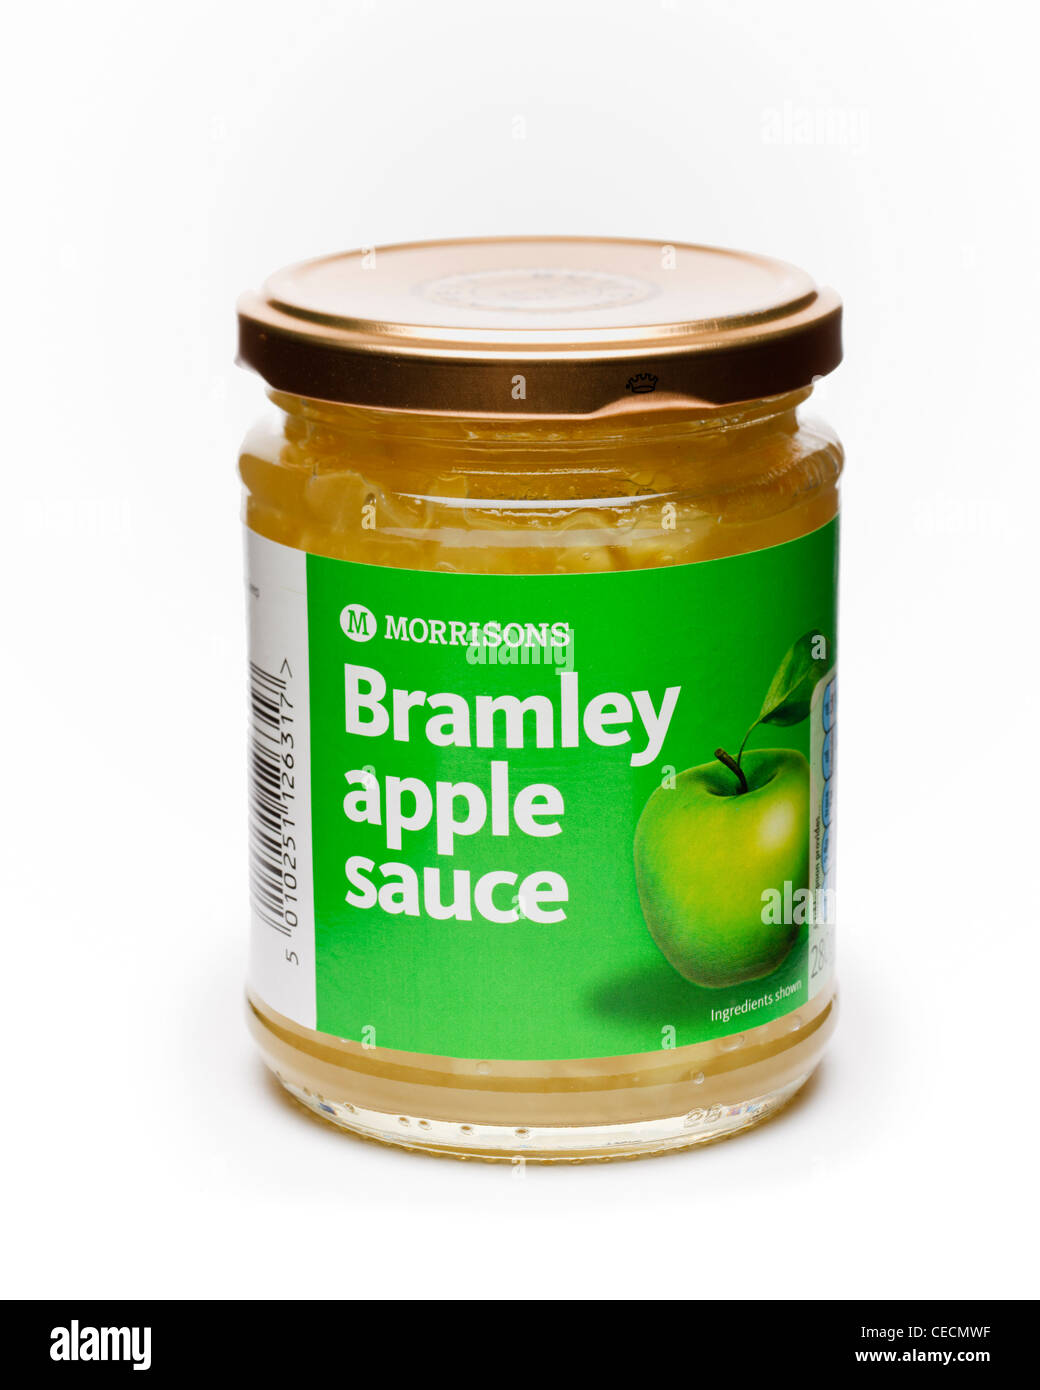 Jar of Bramley apple sauce - on white background Stock Photo